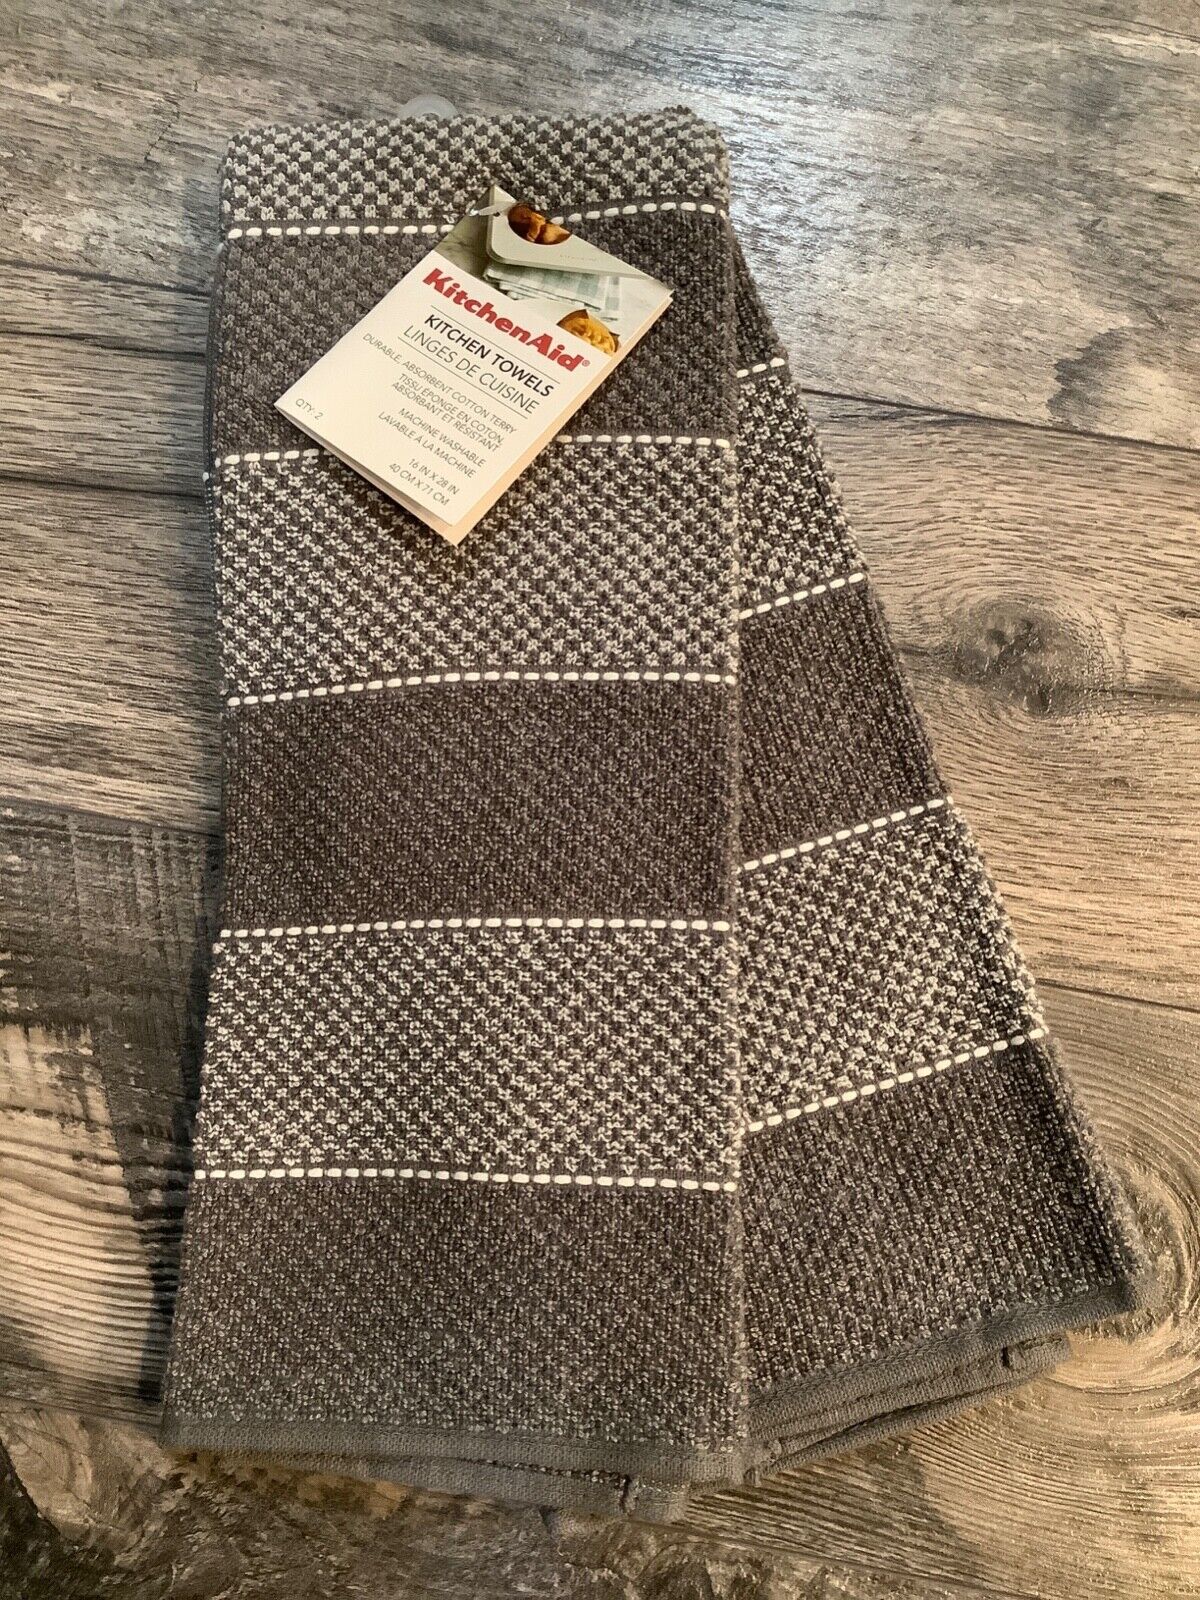 Kitchenaid 2 Kitchen Towels 100% Cotton terry gray grey stripes